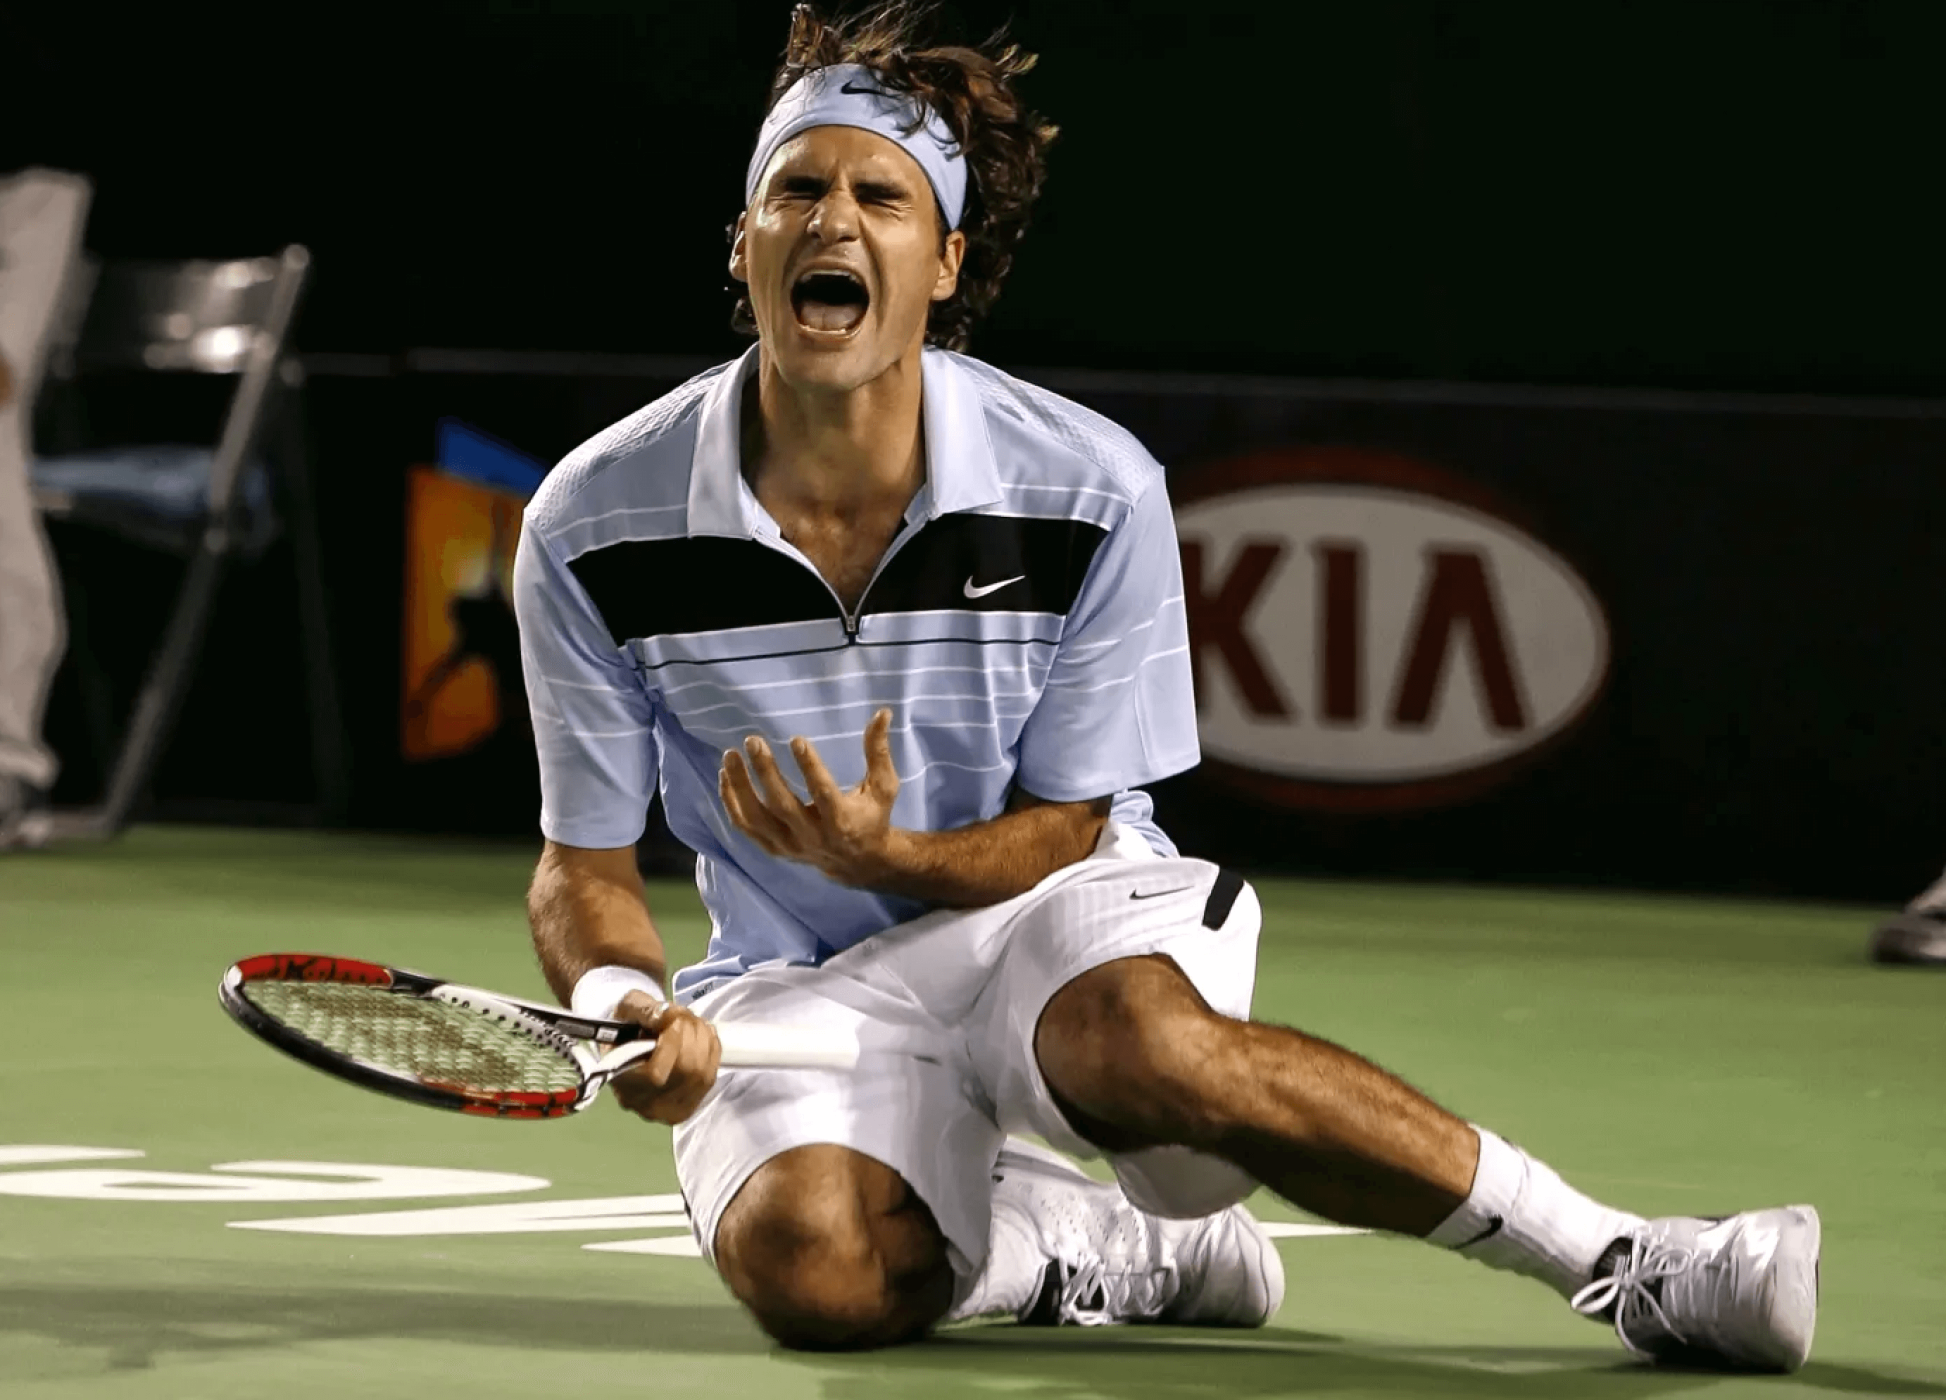 Roger Federer feiert Sieg gegen Fernando Gonzalez im Finale der Australian Open 2007